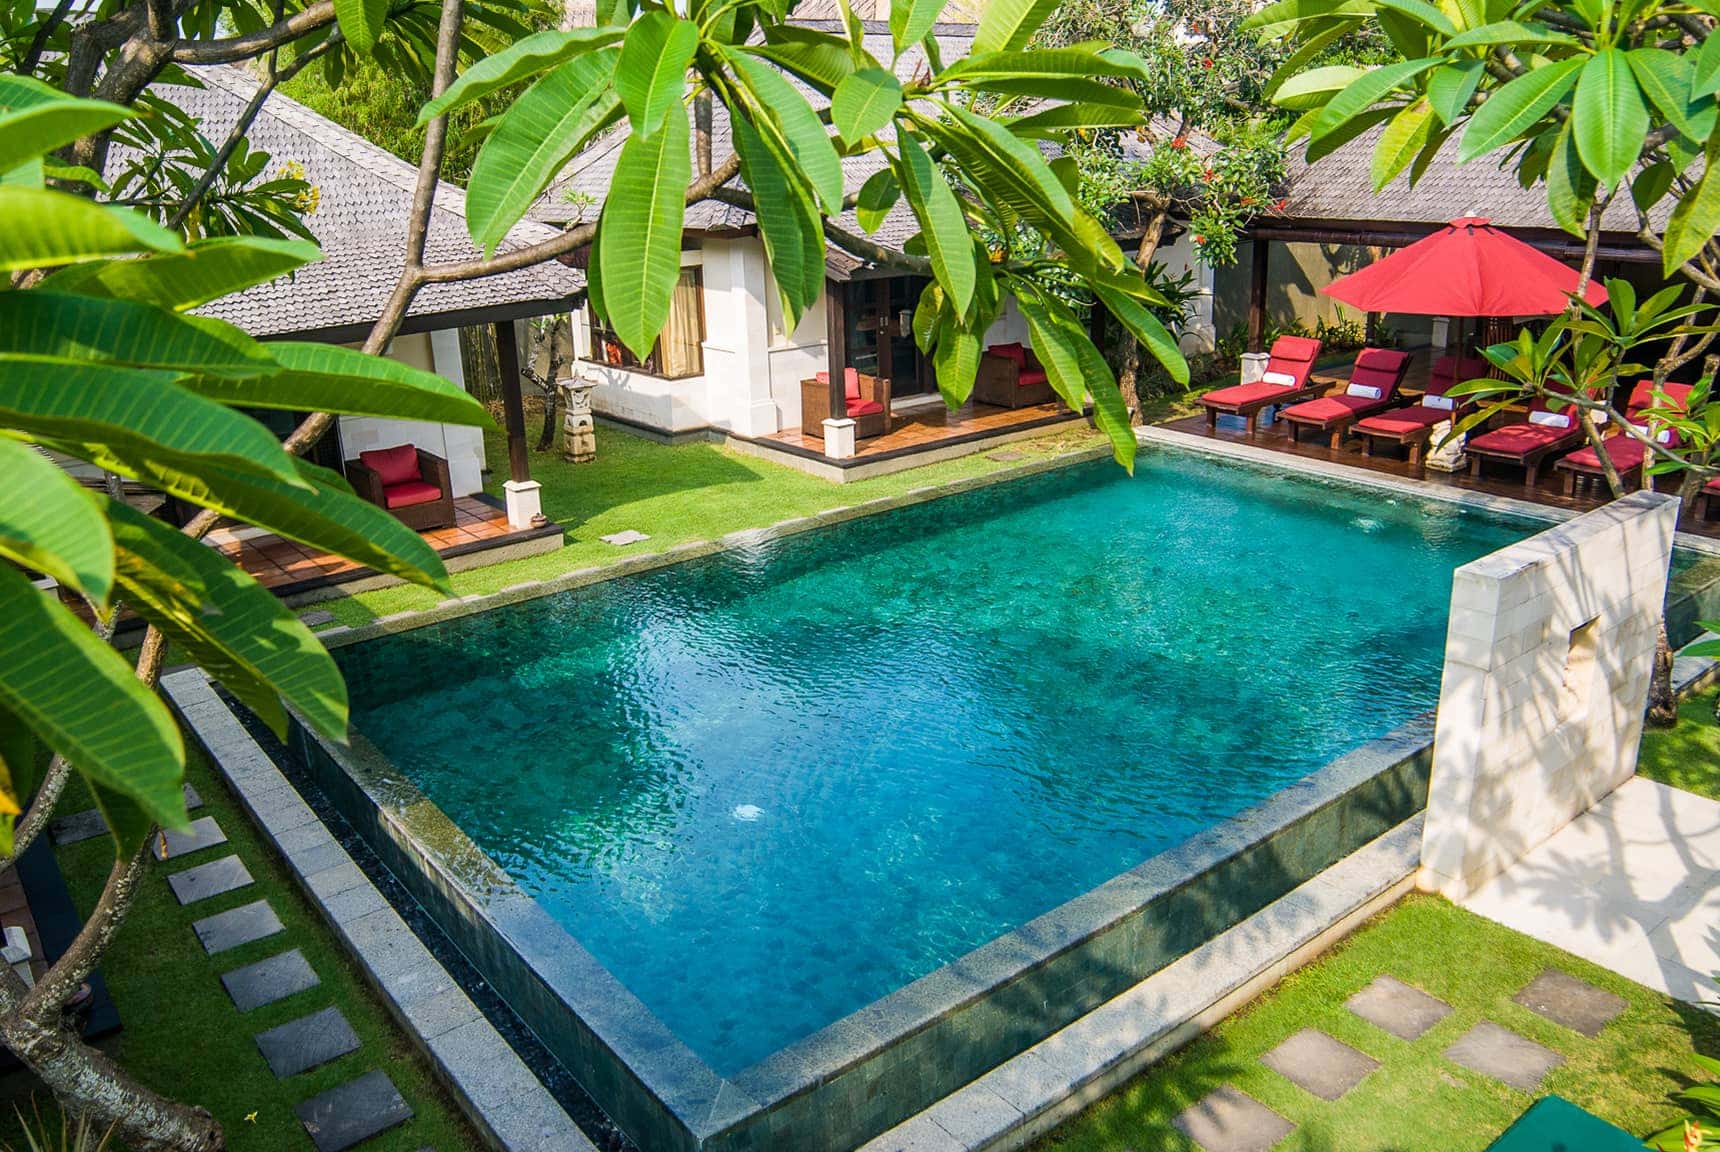 Ulin Villas - Seminyak, Bali Indonesia (Bali villa photography by master photographer Rick Carmichael of LuxViz)